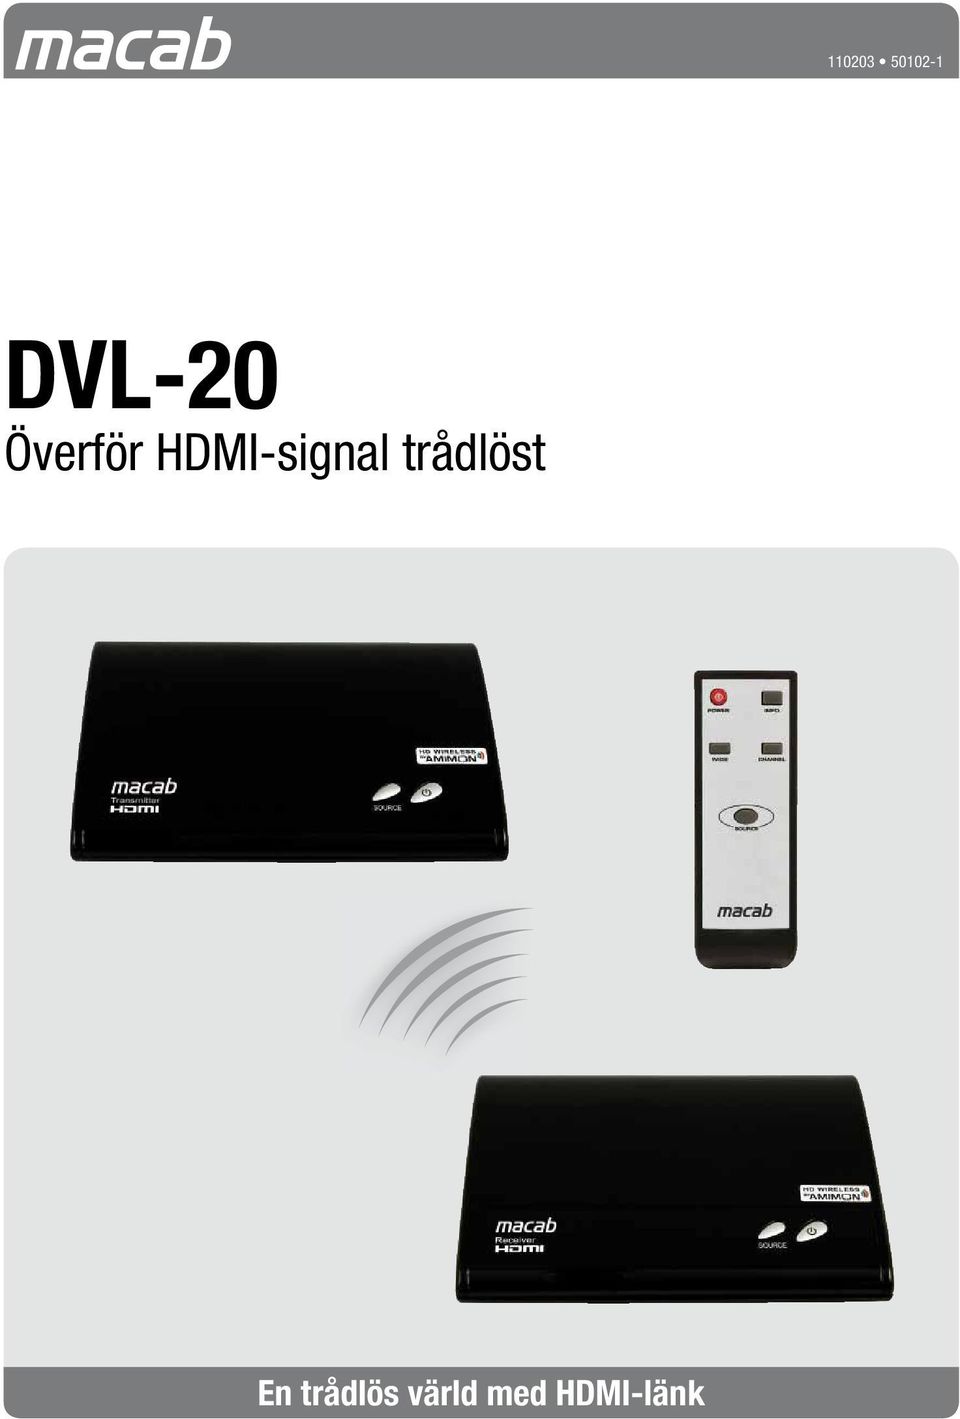 HDMI-signal trådlöst